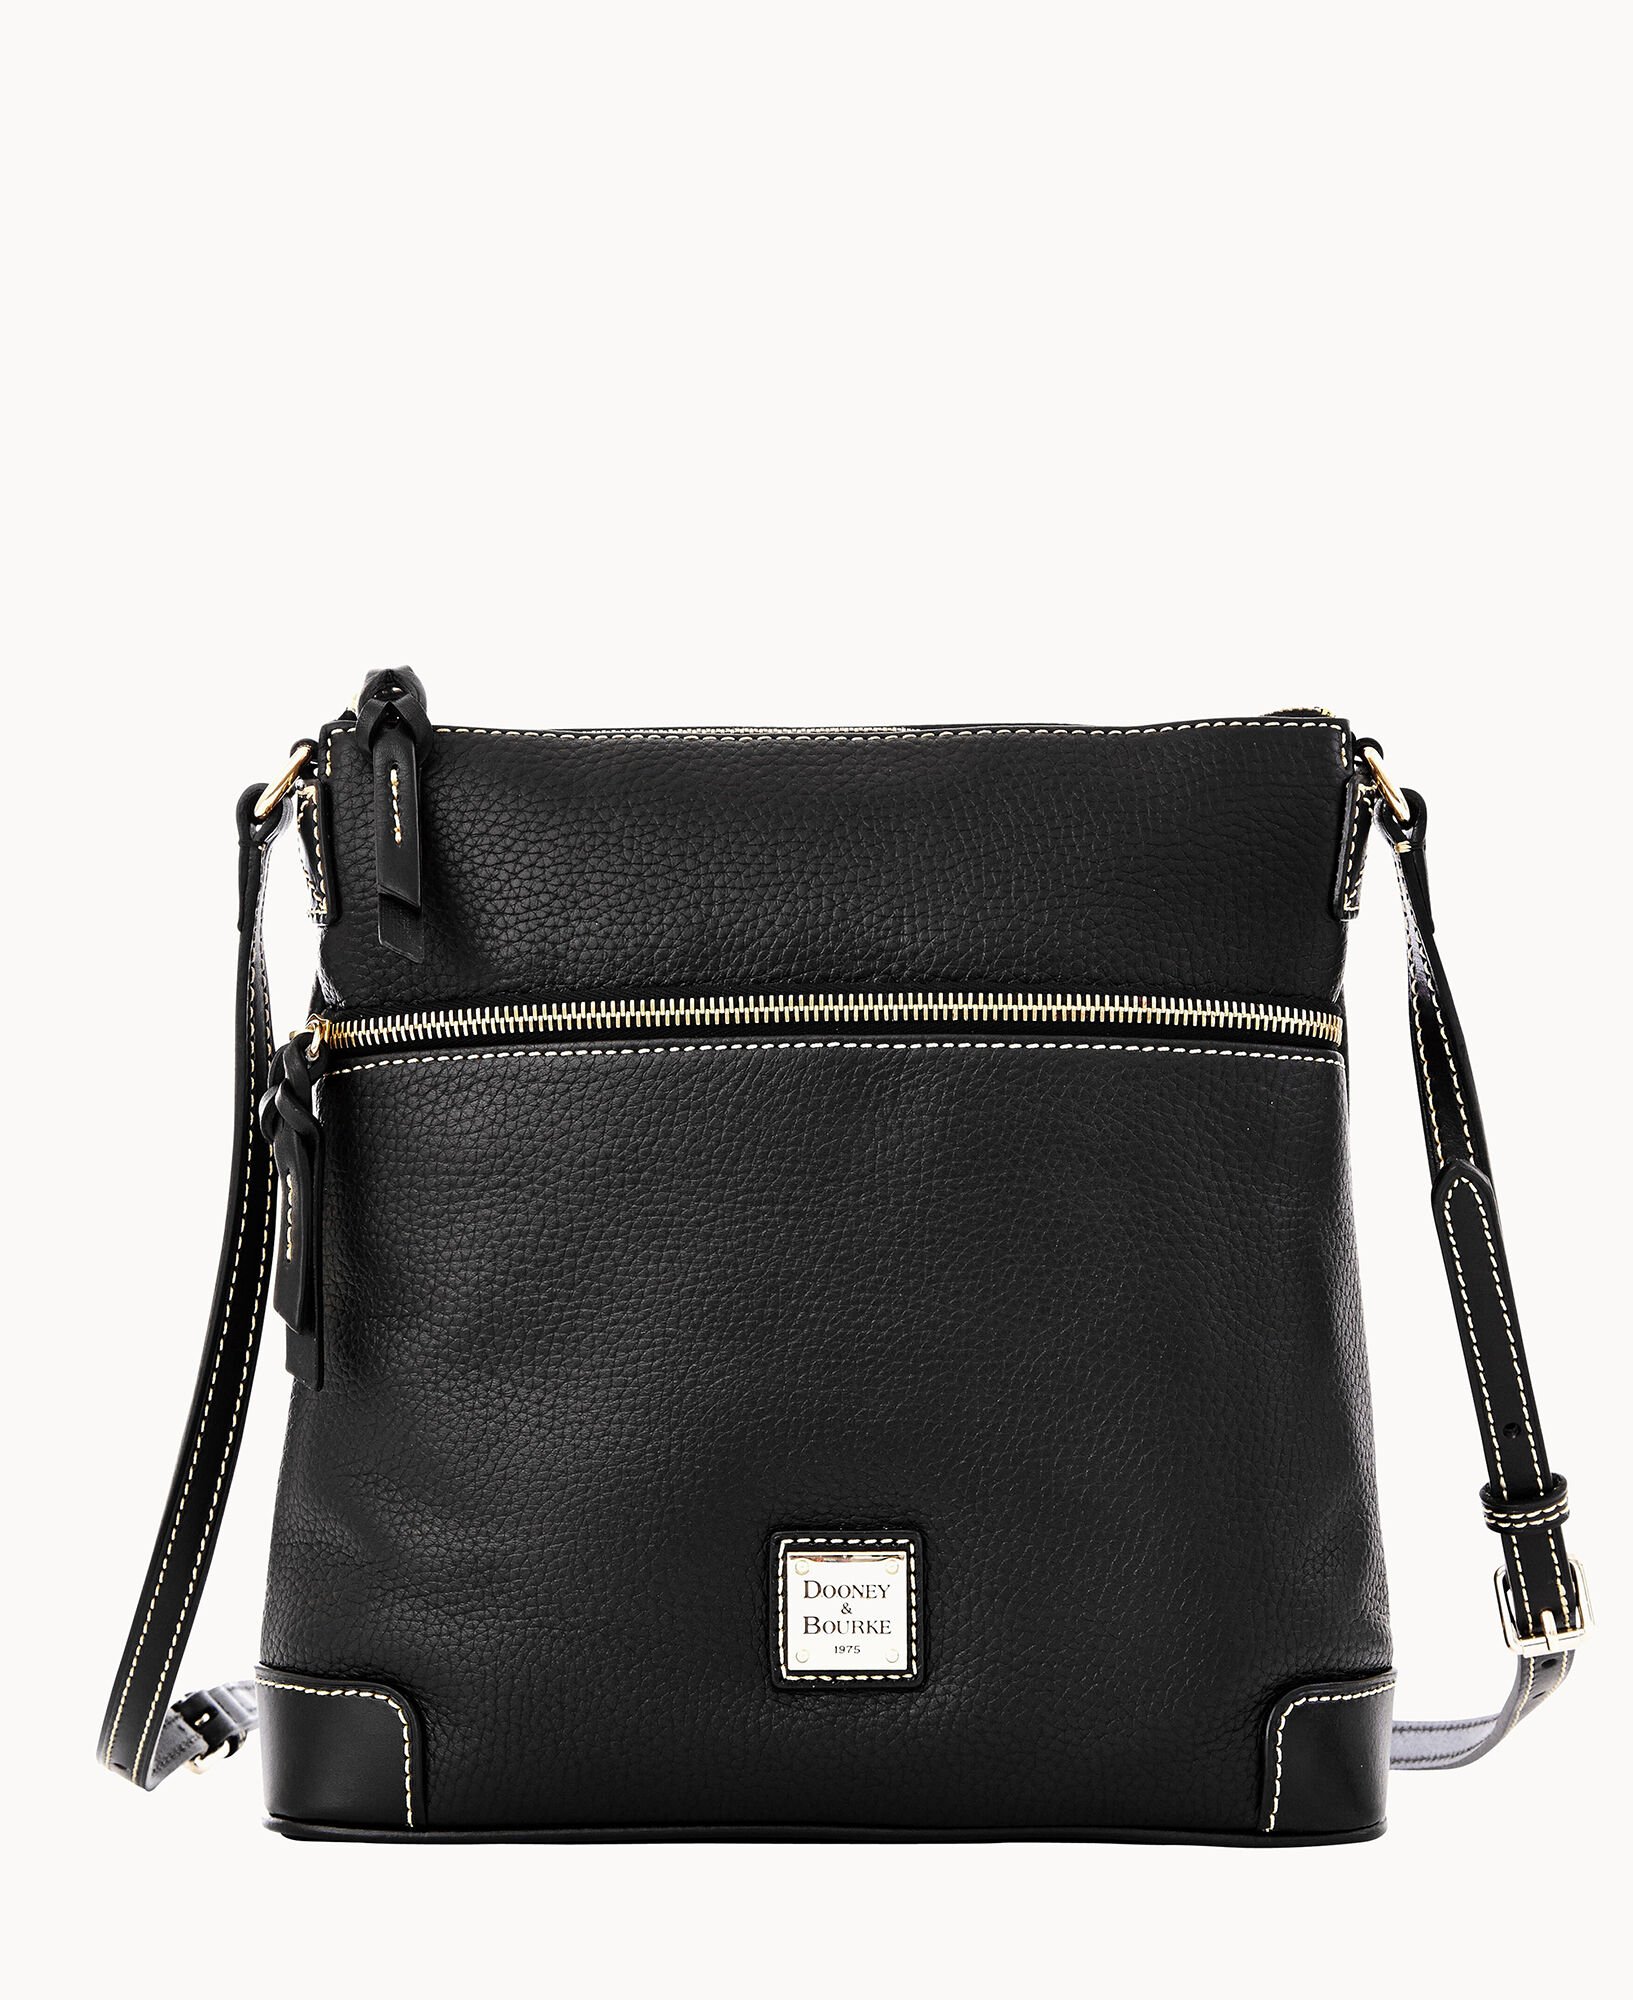 Dooney & Bourke Pebble Leather Small Zip Crossbody Bag Black Shoulder Purse